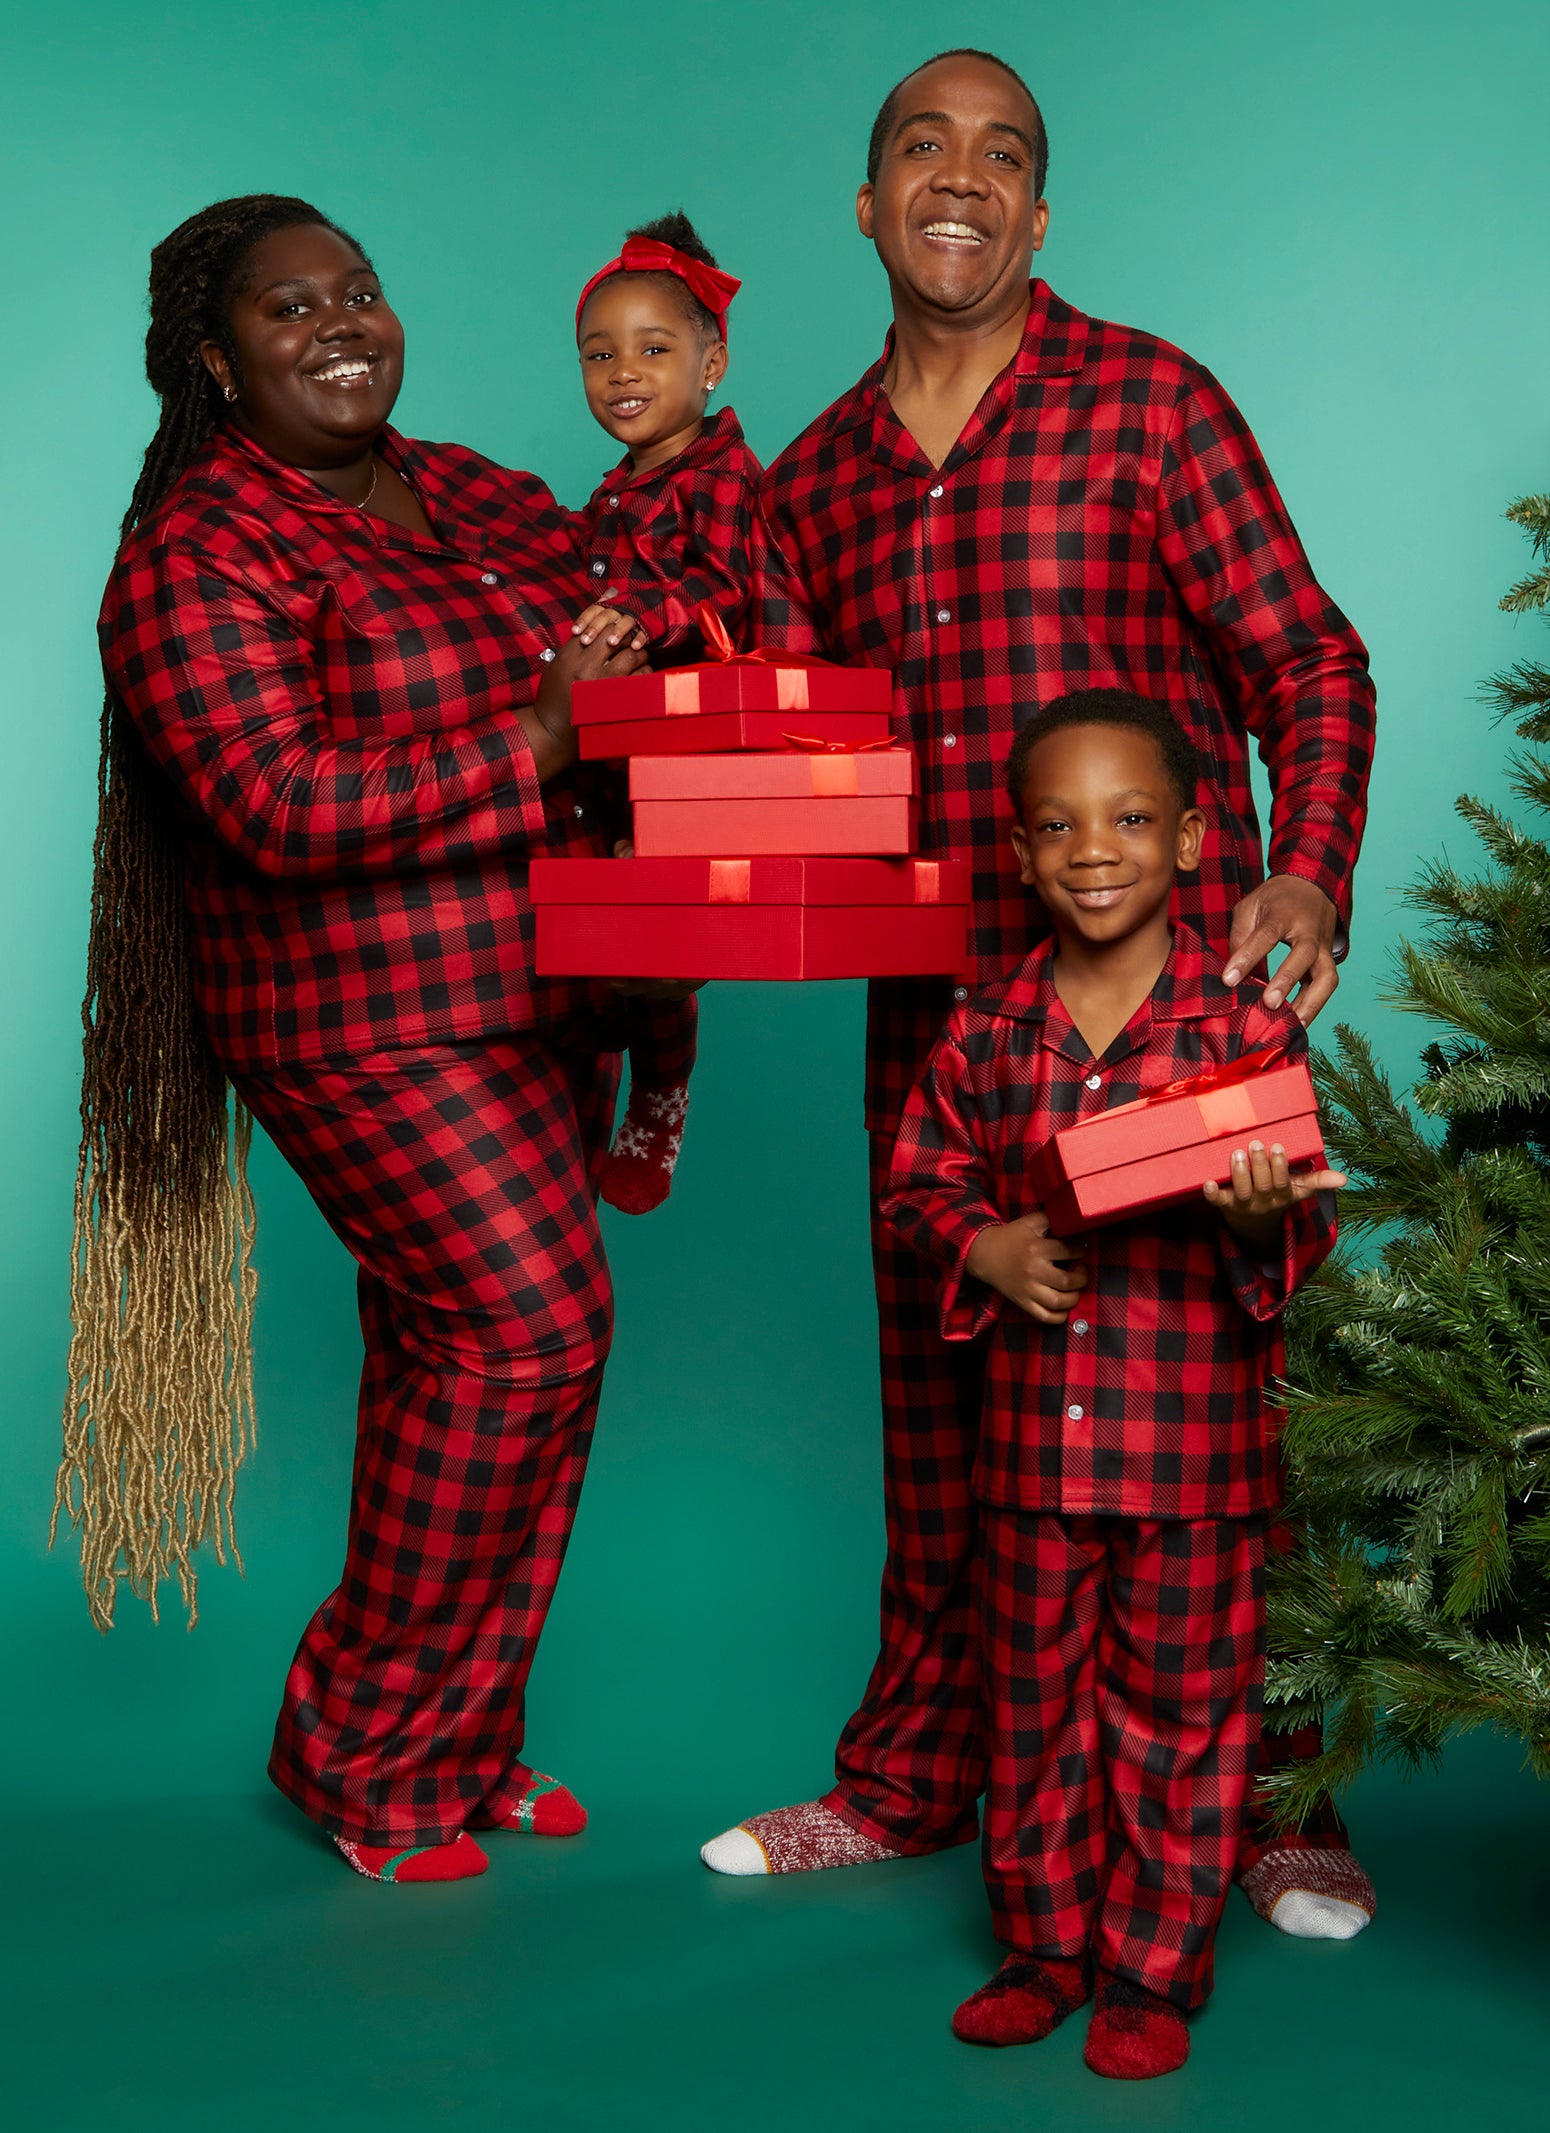 Womens Matching Buffalo Plaid Flannel Family Pajamas